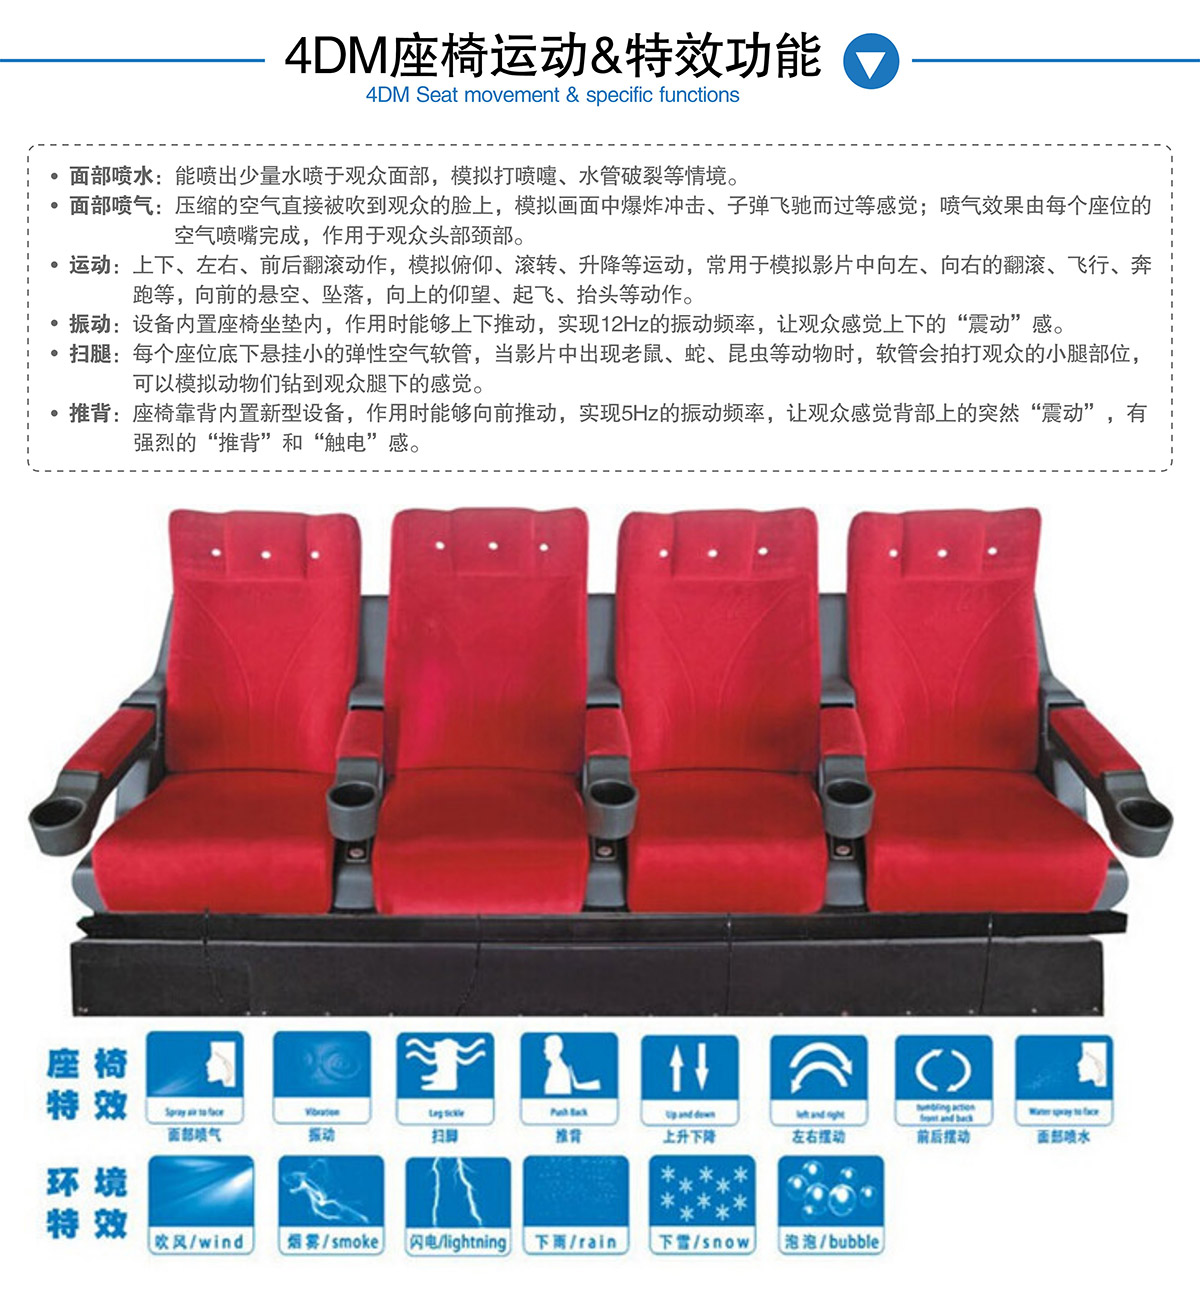 VR台风4DM座椅运动和特效功能.jpg